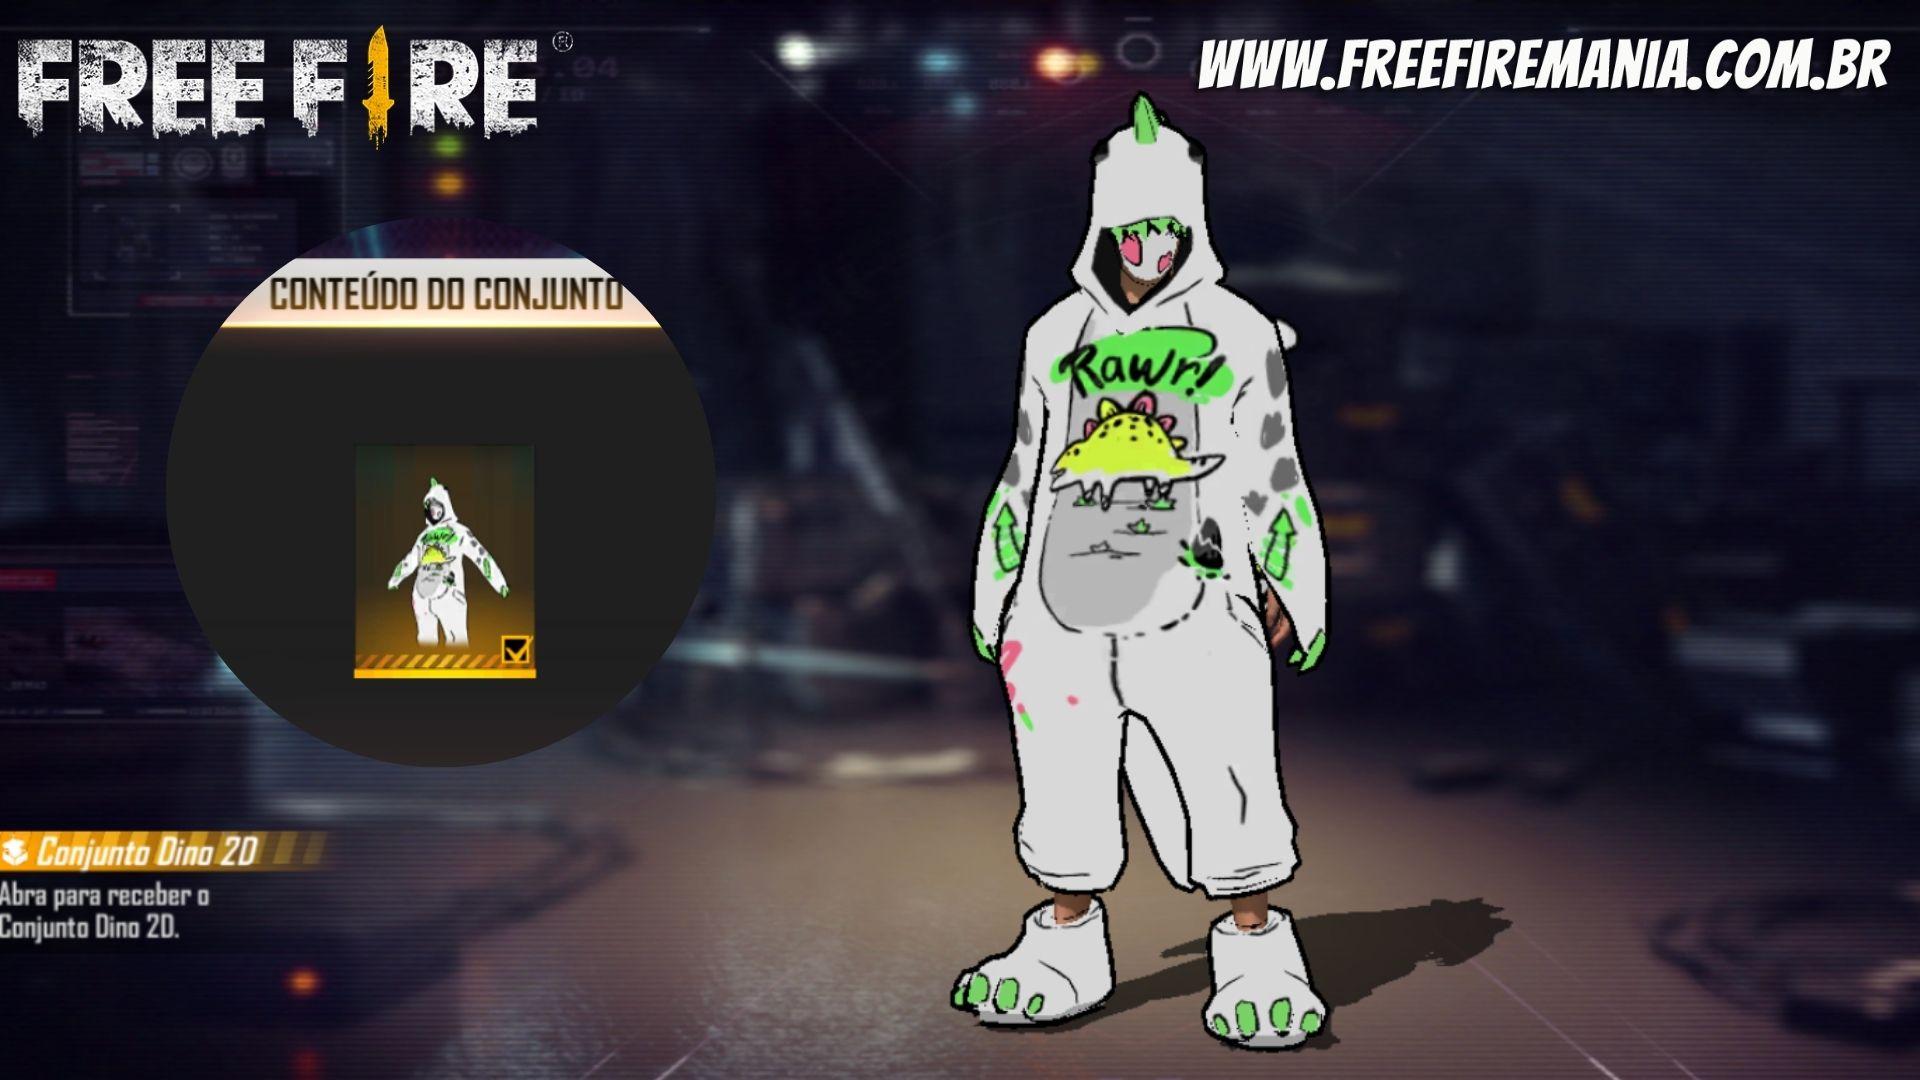 Free Fire lanza a Dino en forma de dibujo: “Dino 20”